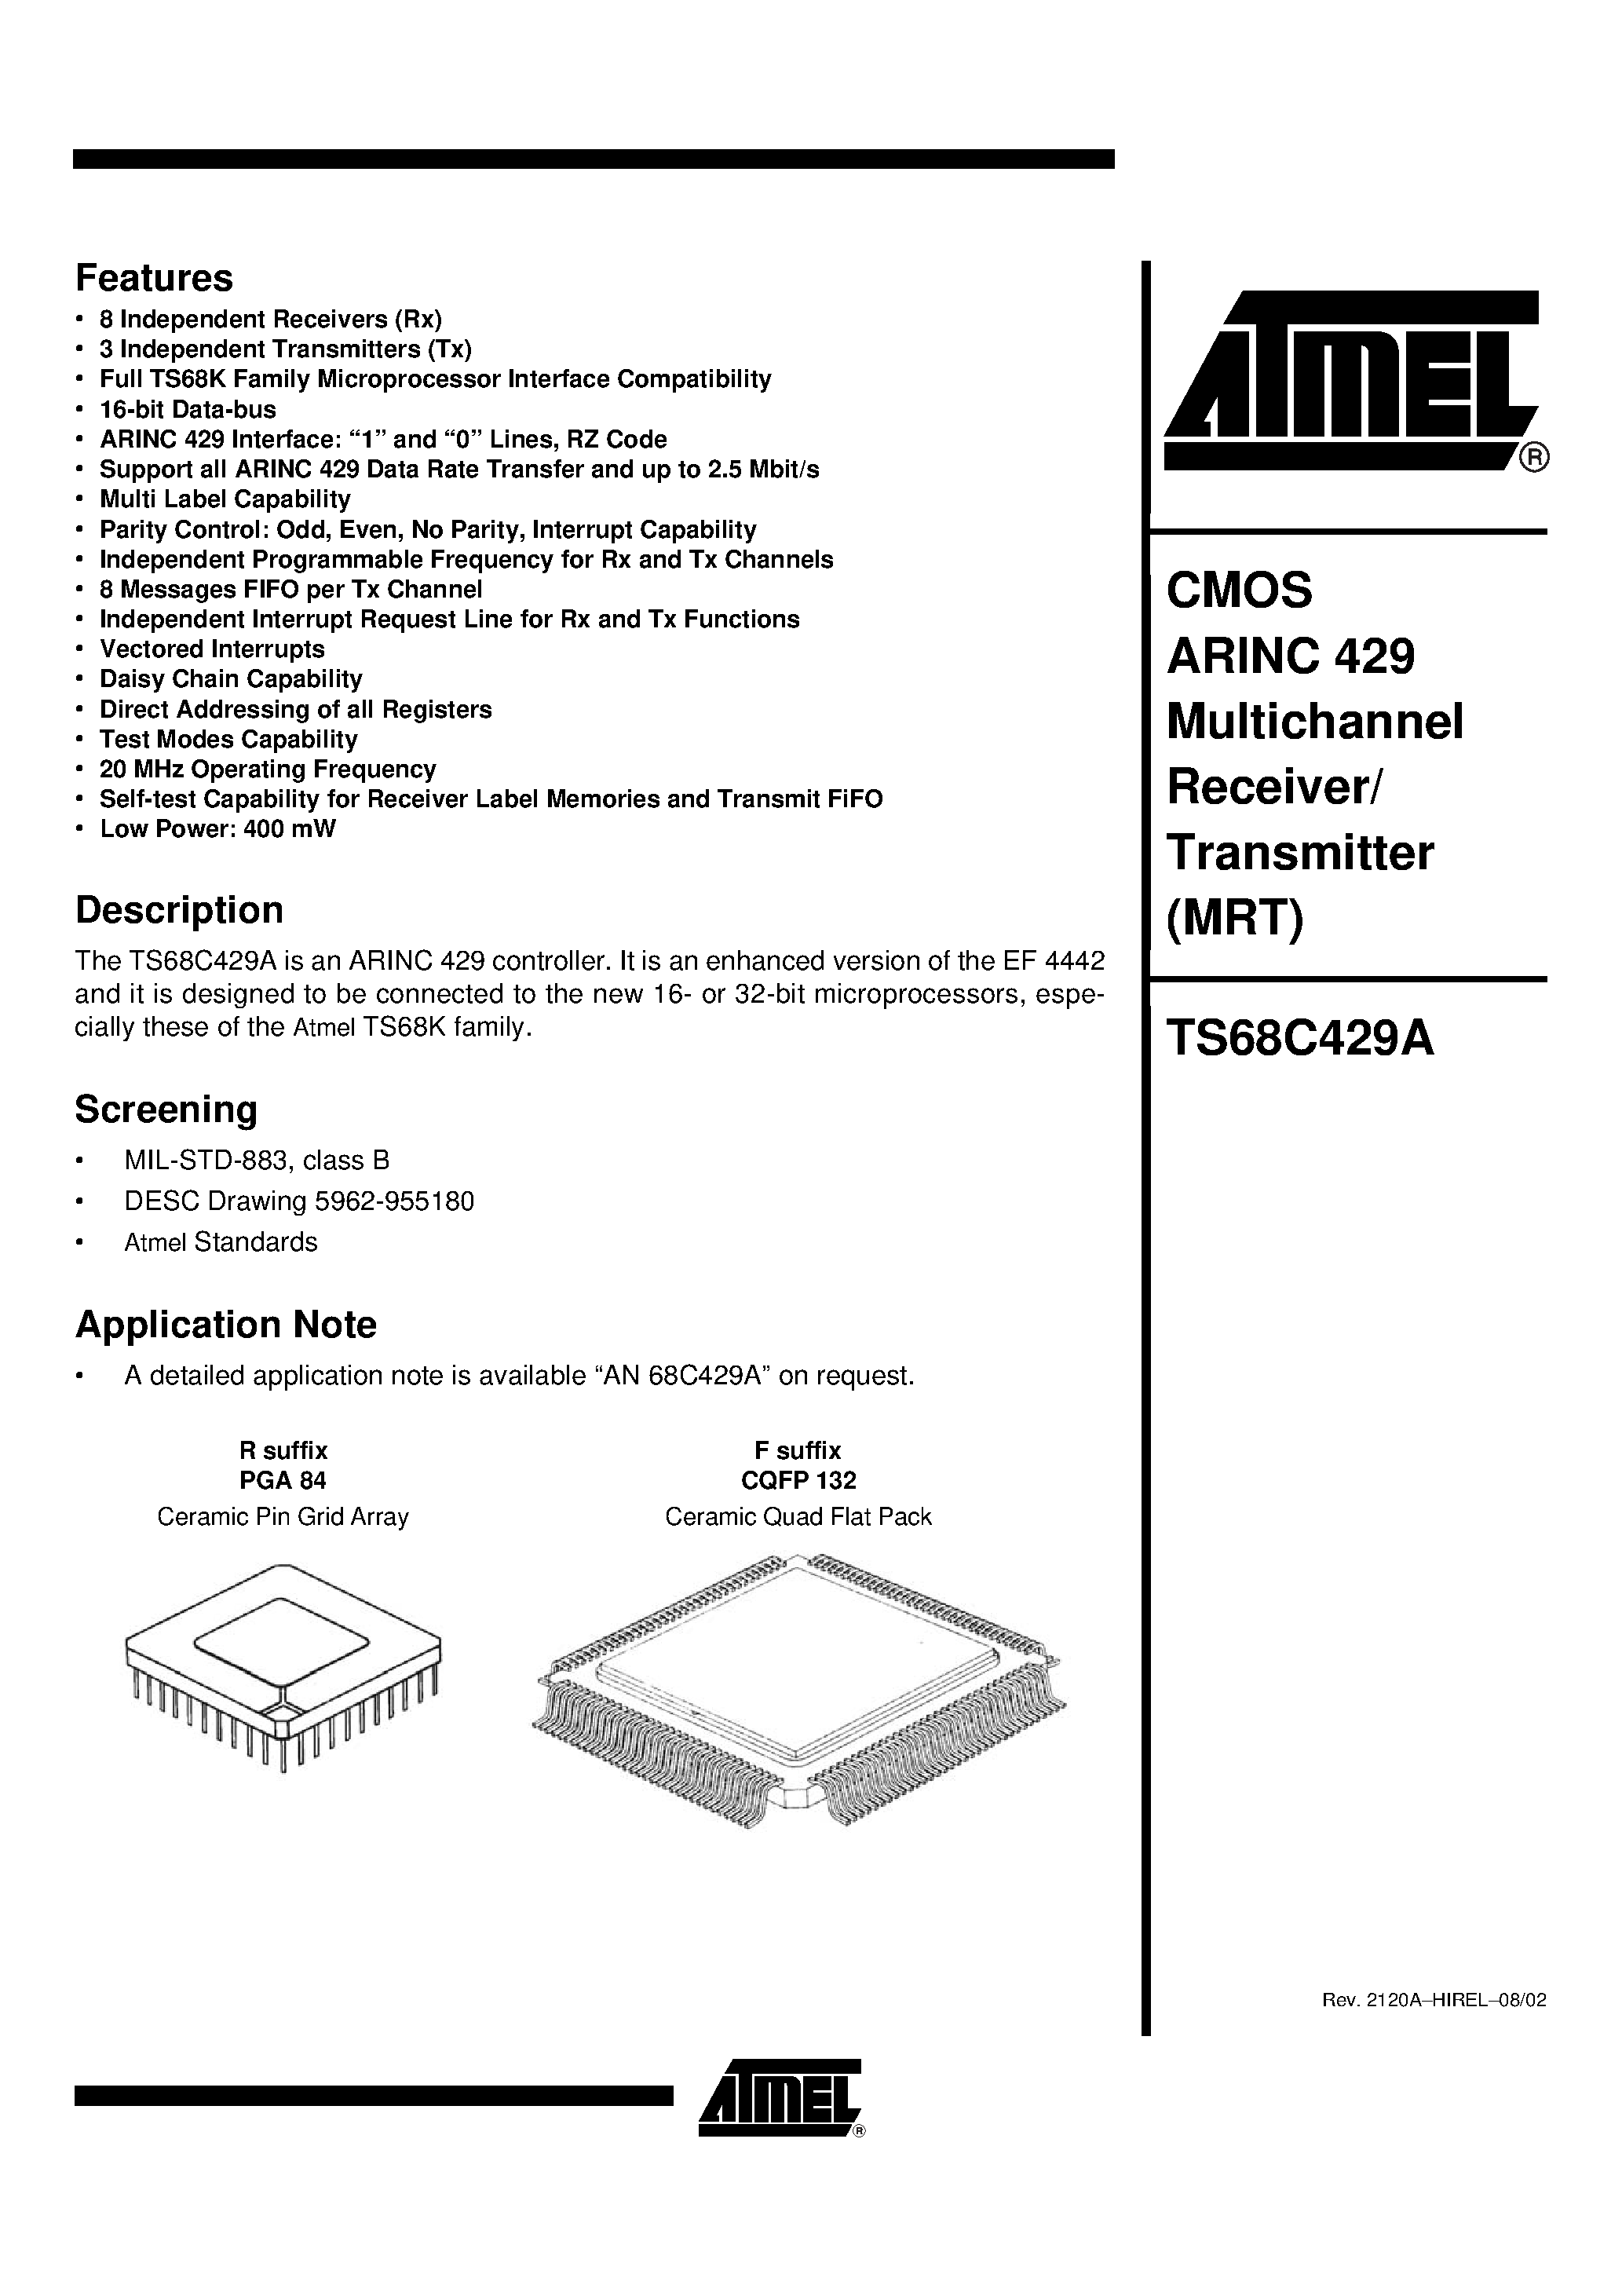 Даташит TS68C429AMFB/C - CMOS ARINC 429 Multichannel Receiver/ Transmitter MRT страница 1